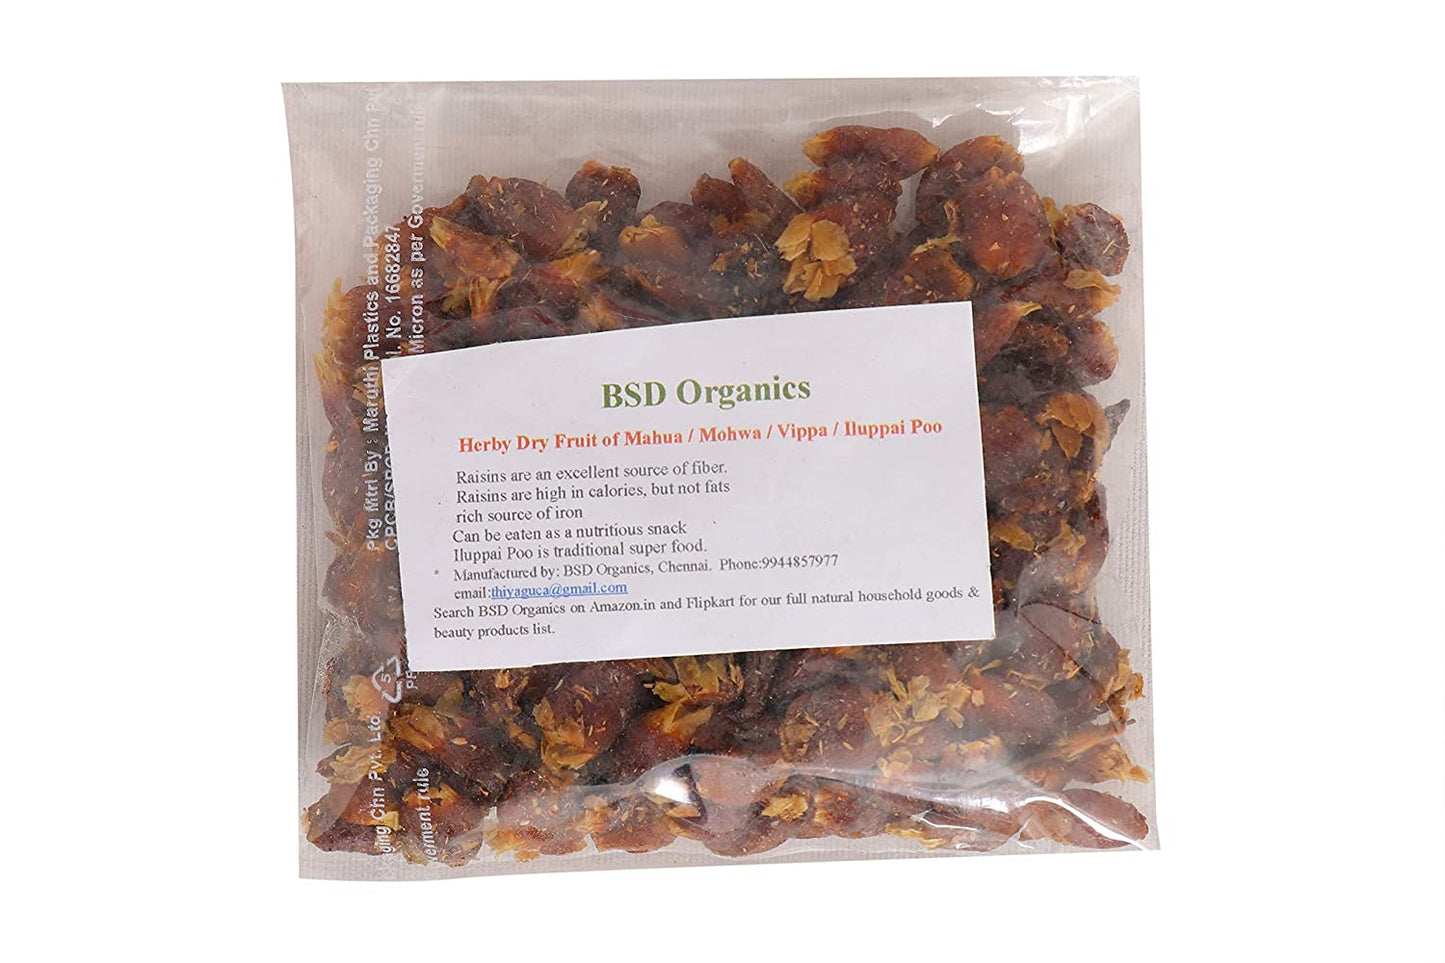 BSD Organics Herby Dry Fruit of Mahua / Mohwa / Vippa / Iluppai Poo- 1 Kilogram